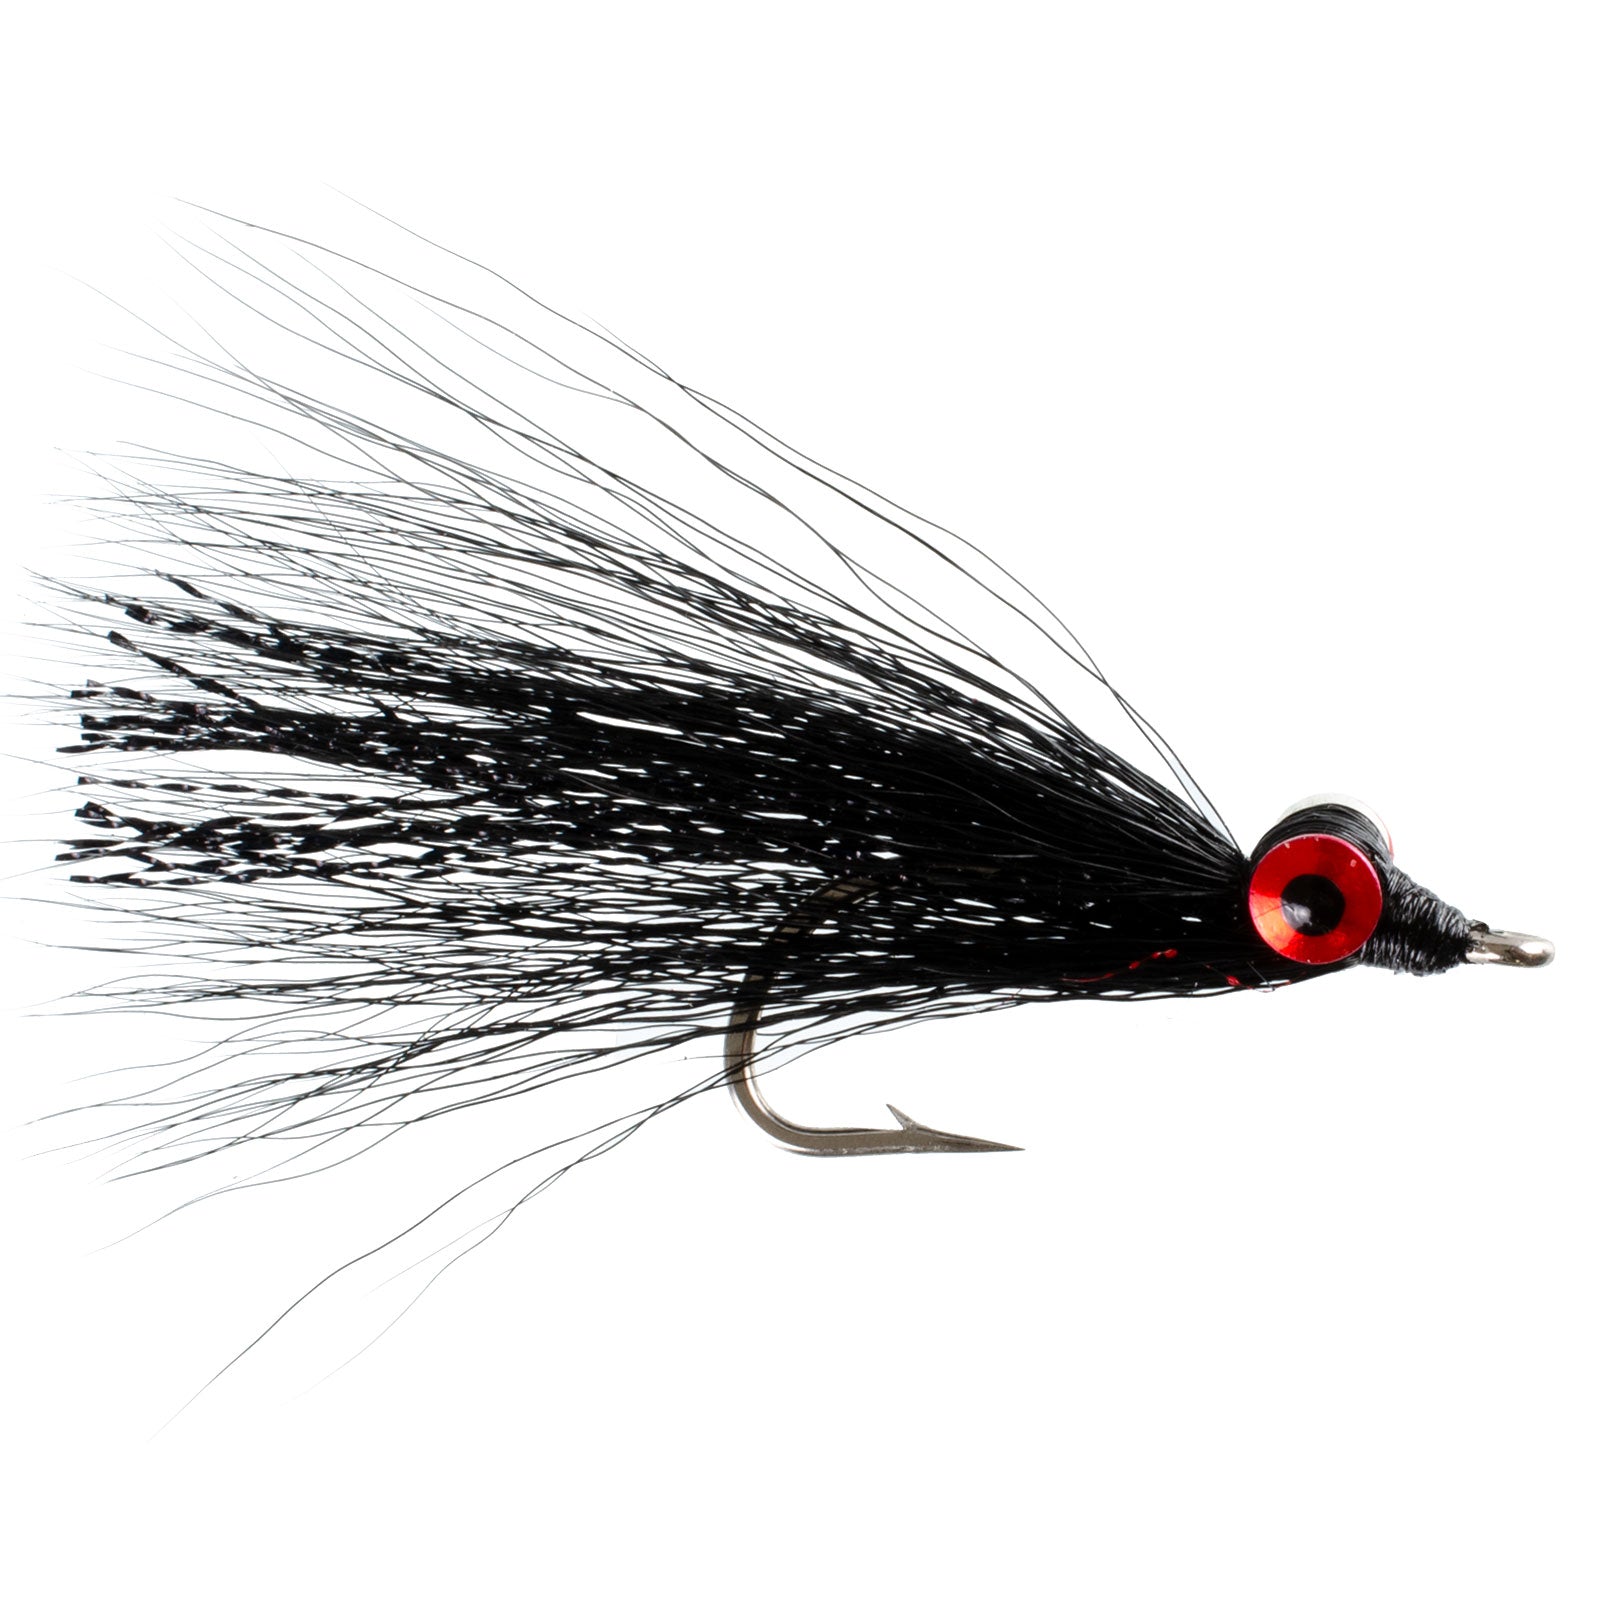 Clousers Deep Minnow Black - Streamer Fly Fishing Flies - 4 Saltwater and Bass Flies - Hook Size 1/0